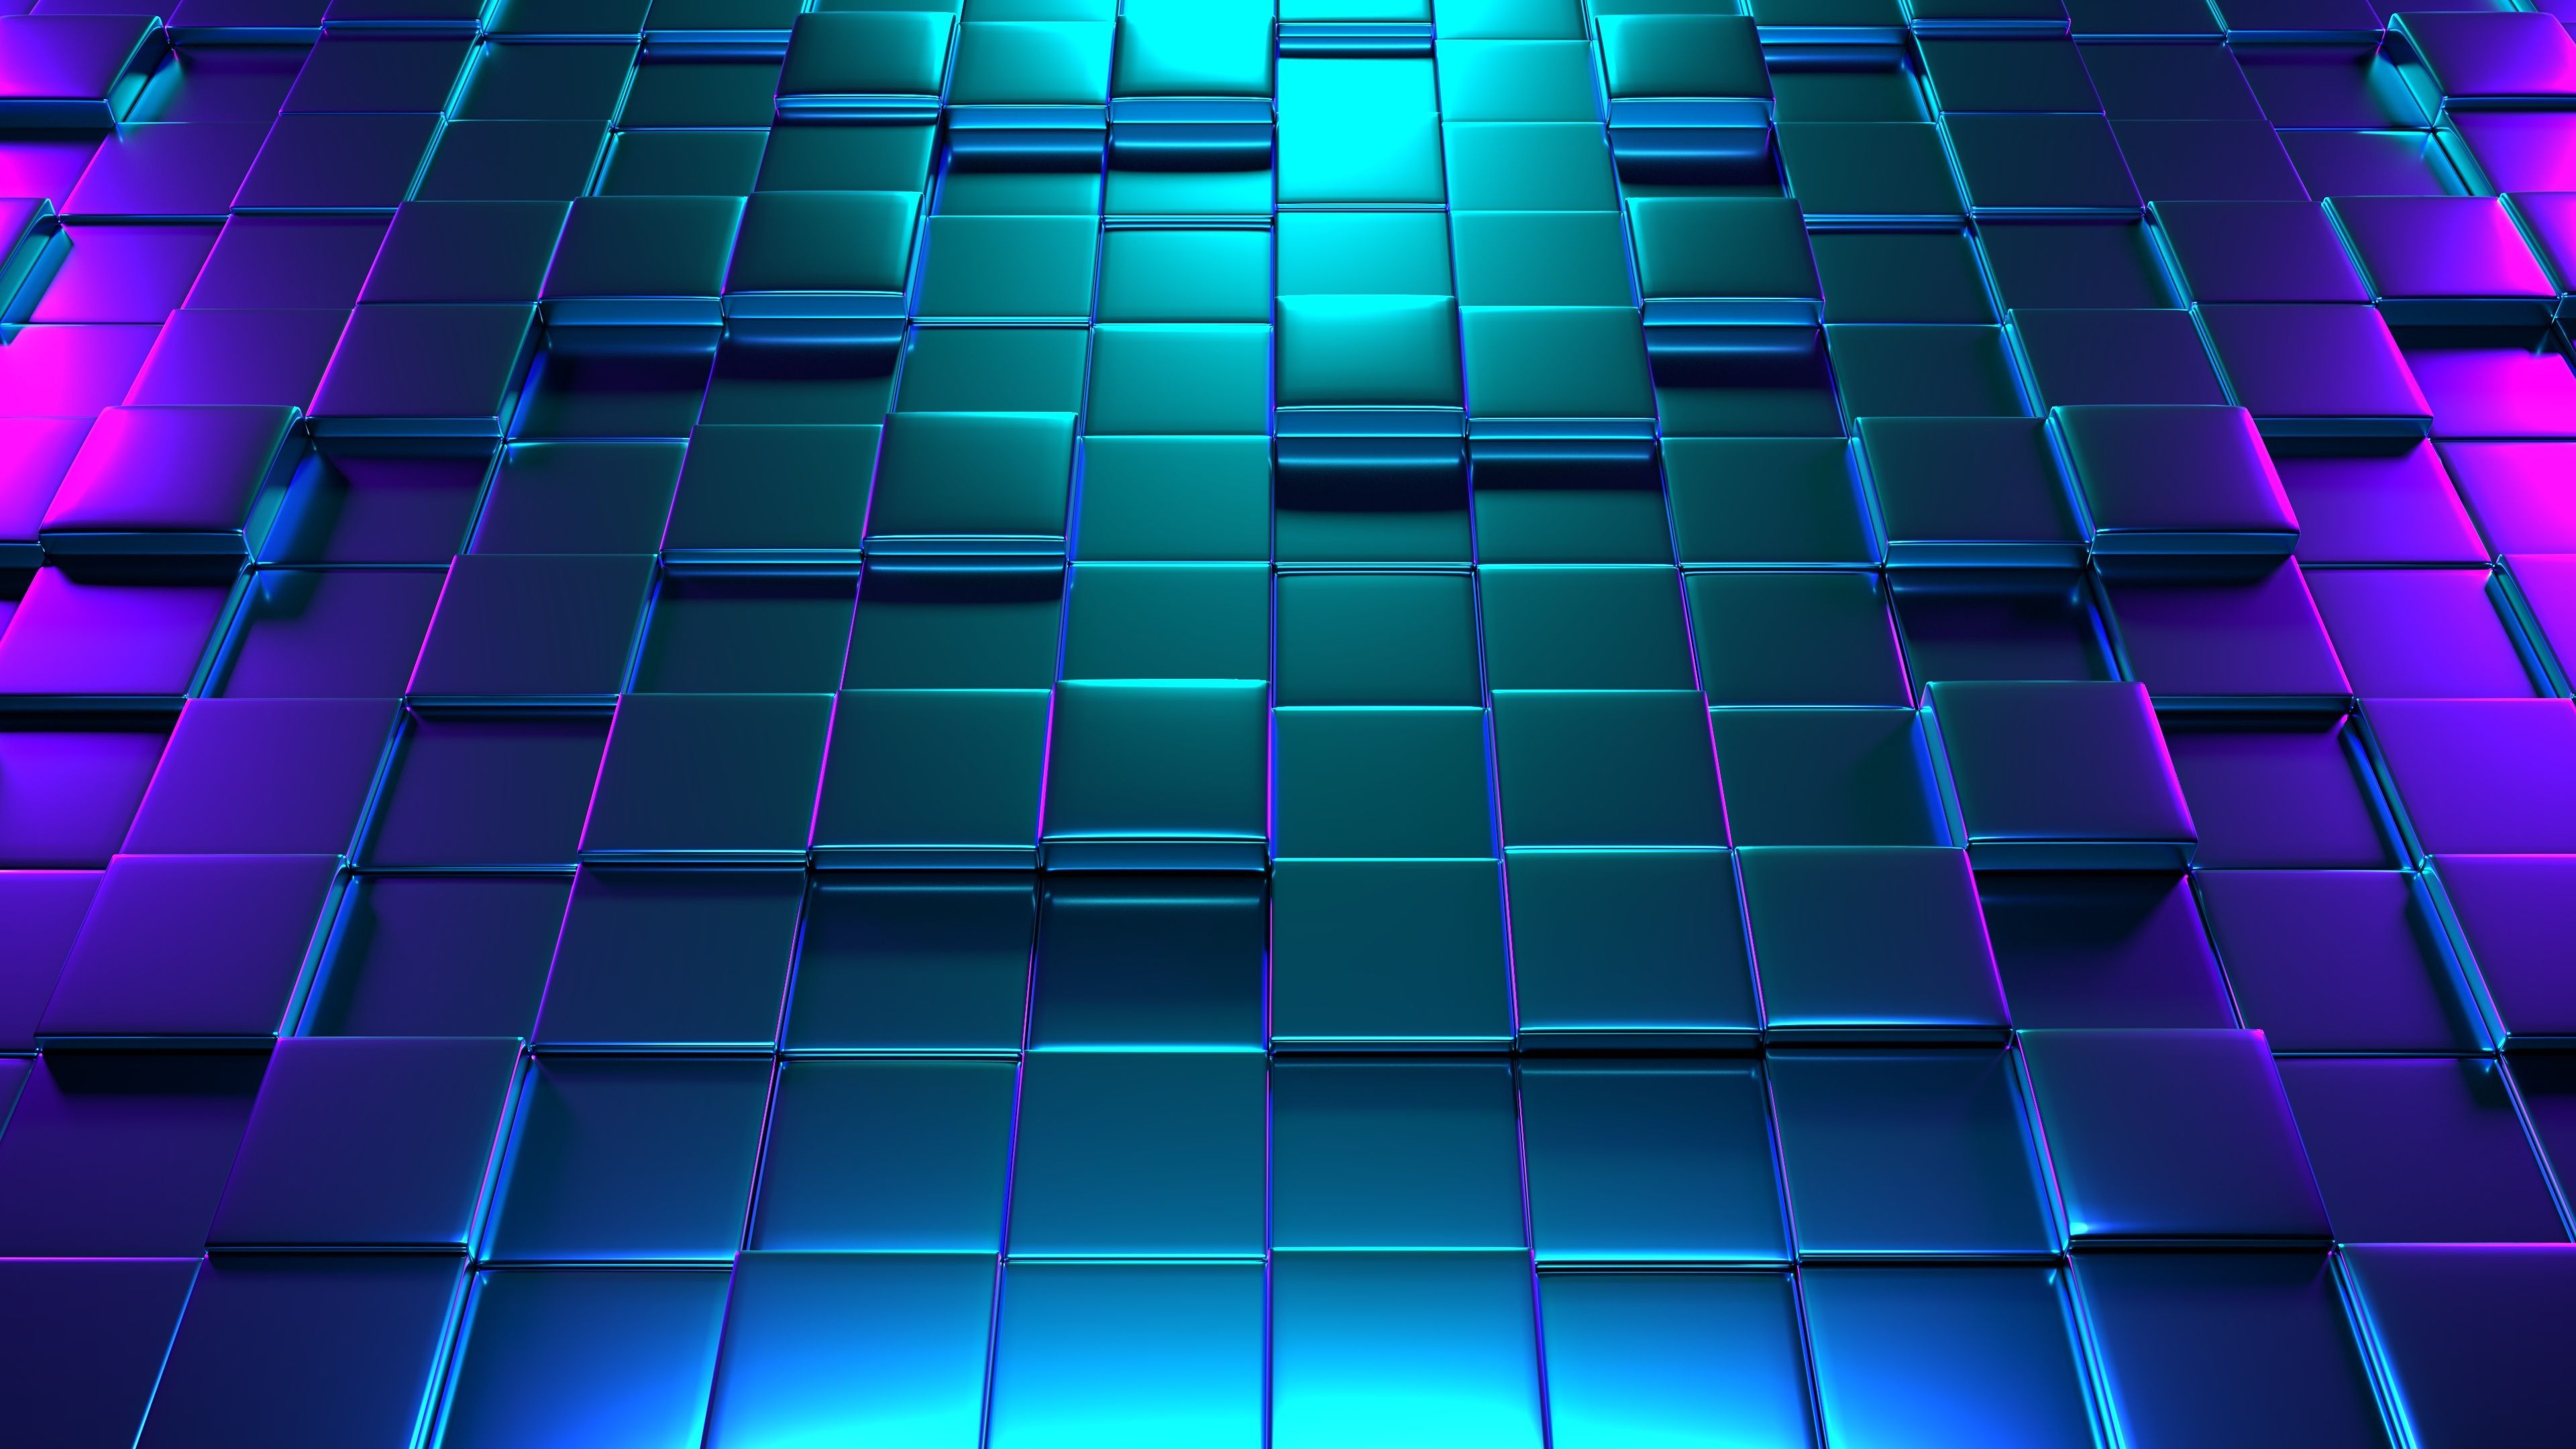 Neon 3D Cubes 4K. Wallpaper iphone neon, Neon wallpaper, Free 3D wallpaper